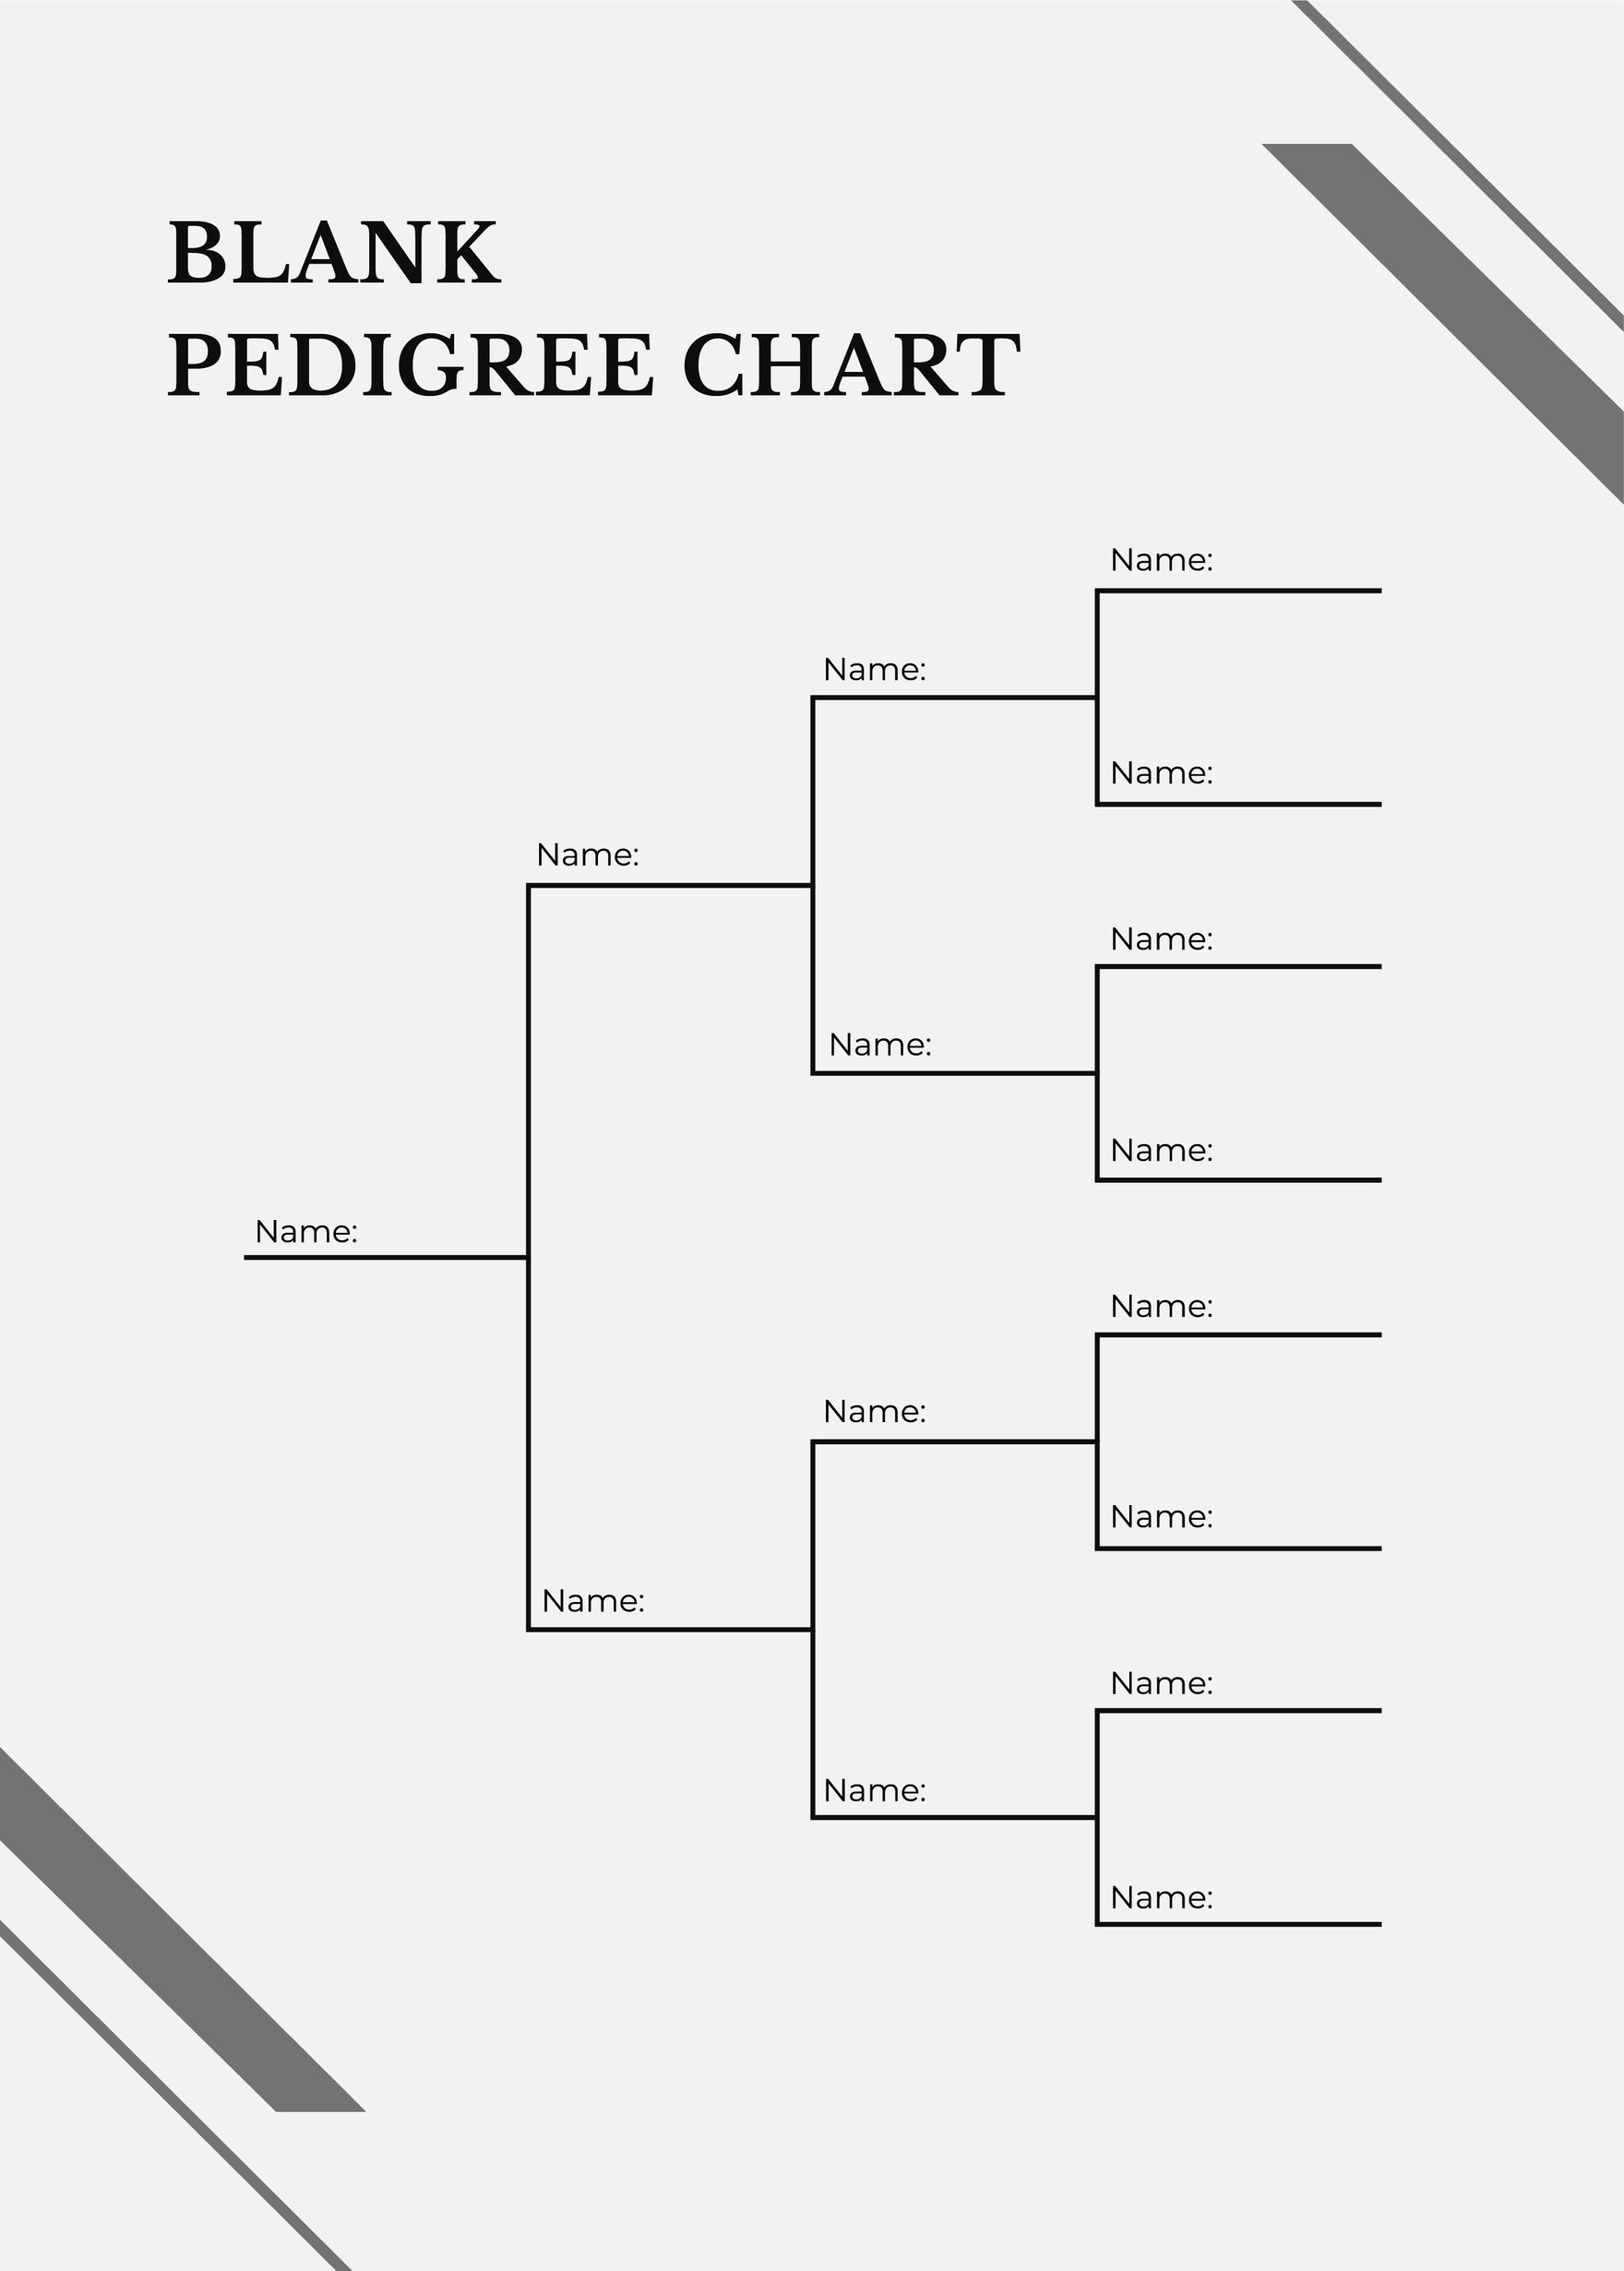 Blank Pedigree Chart in Illustrator, PDF Download